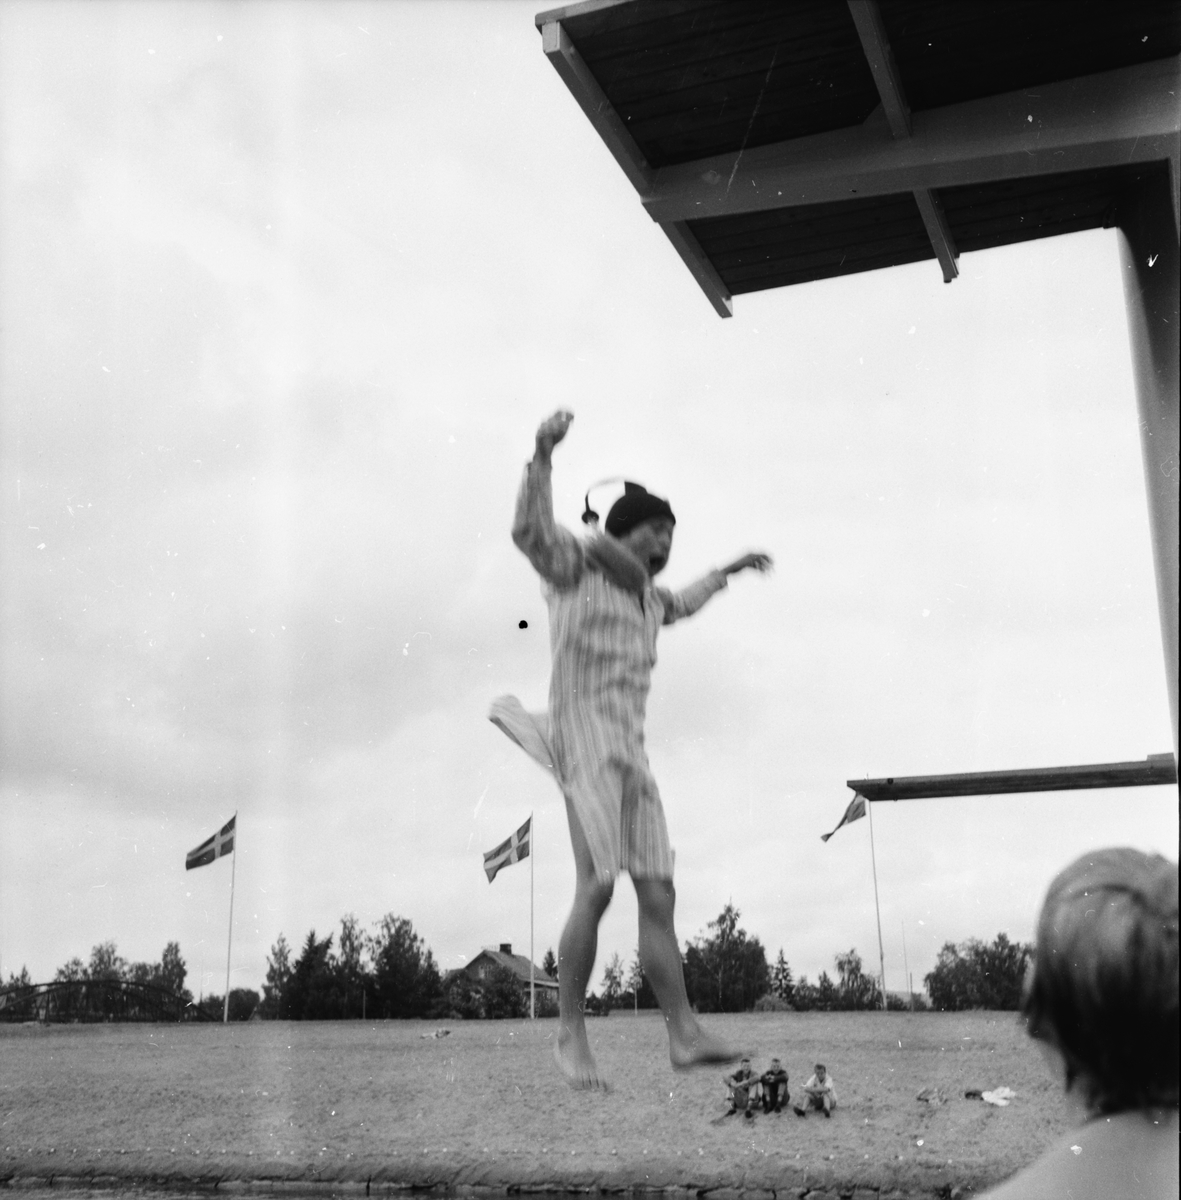 Karlslundsbad simhoppare.
Bollnäs 16/8 1958